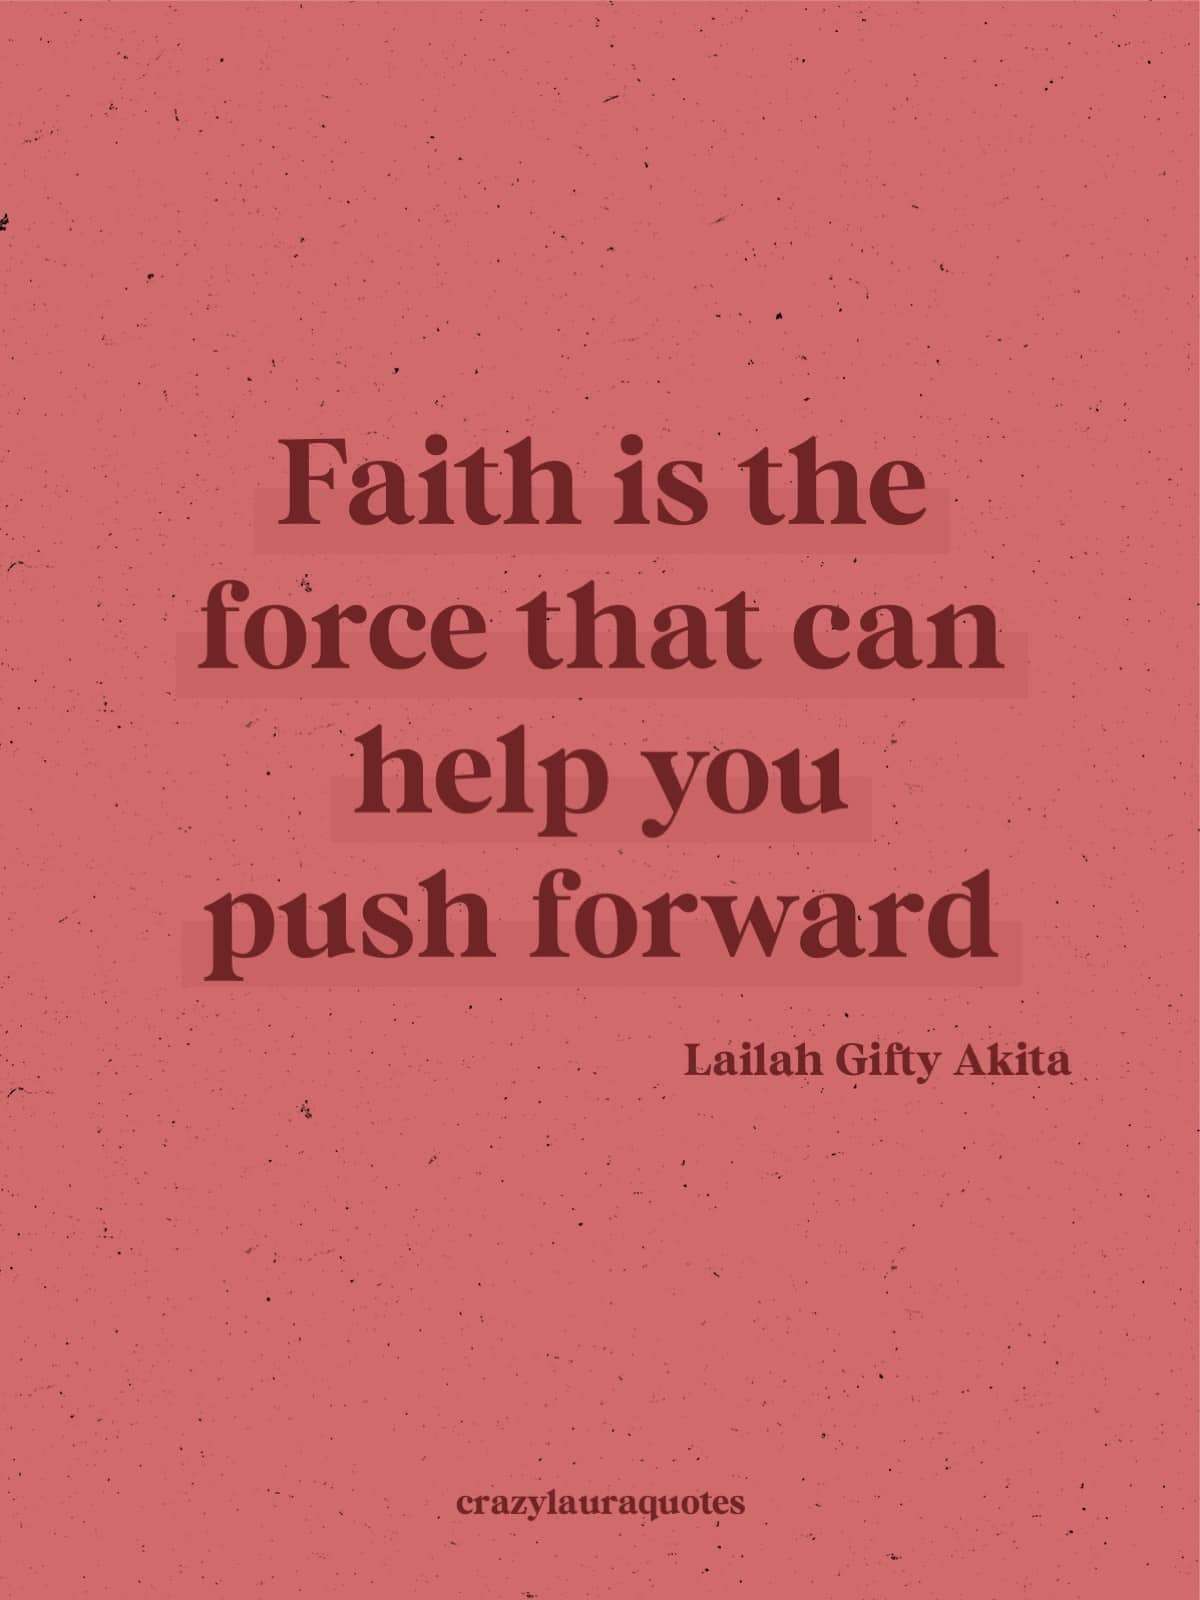 faith can help you push forward quote